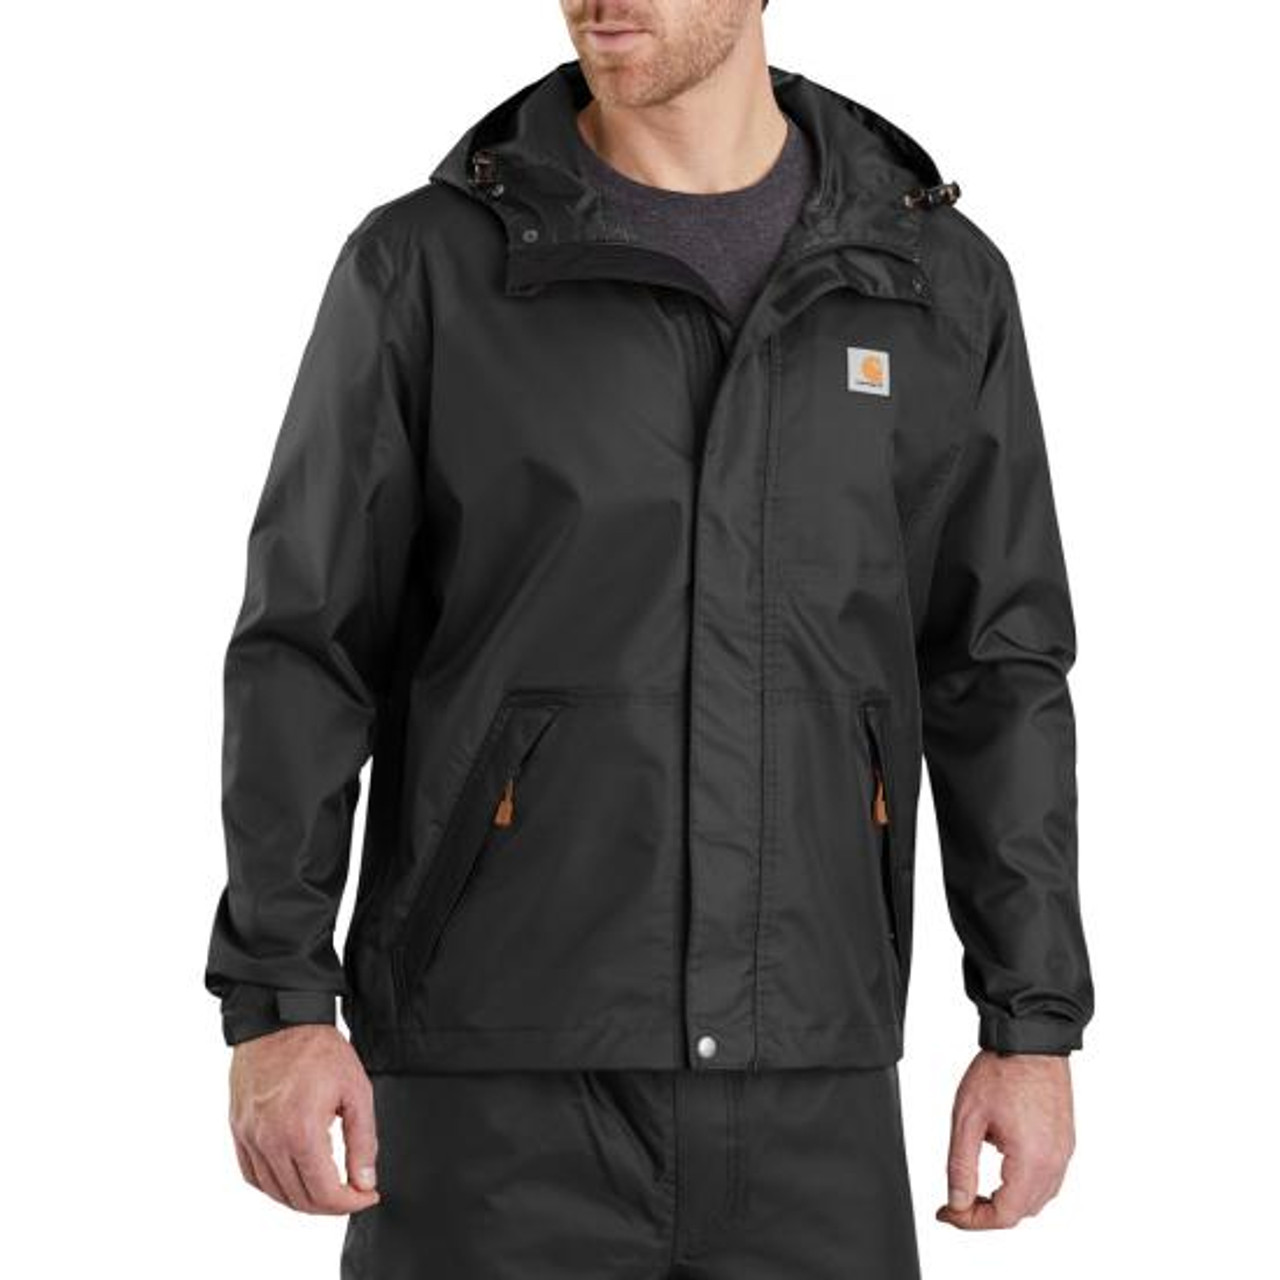 Carhartt Dry Harbor waterproof jacket 103510 - Jimmy's Work N Wear